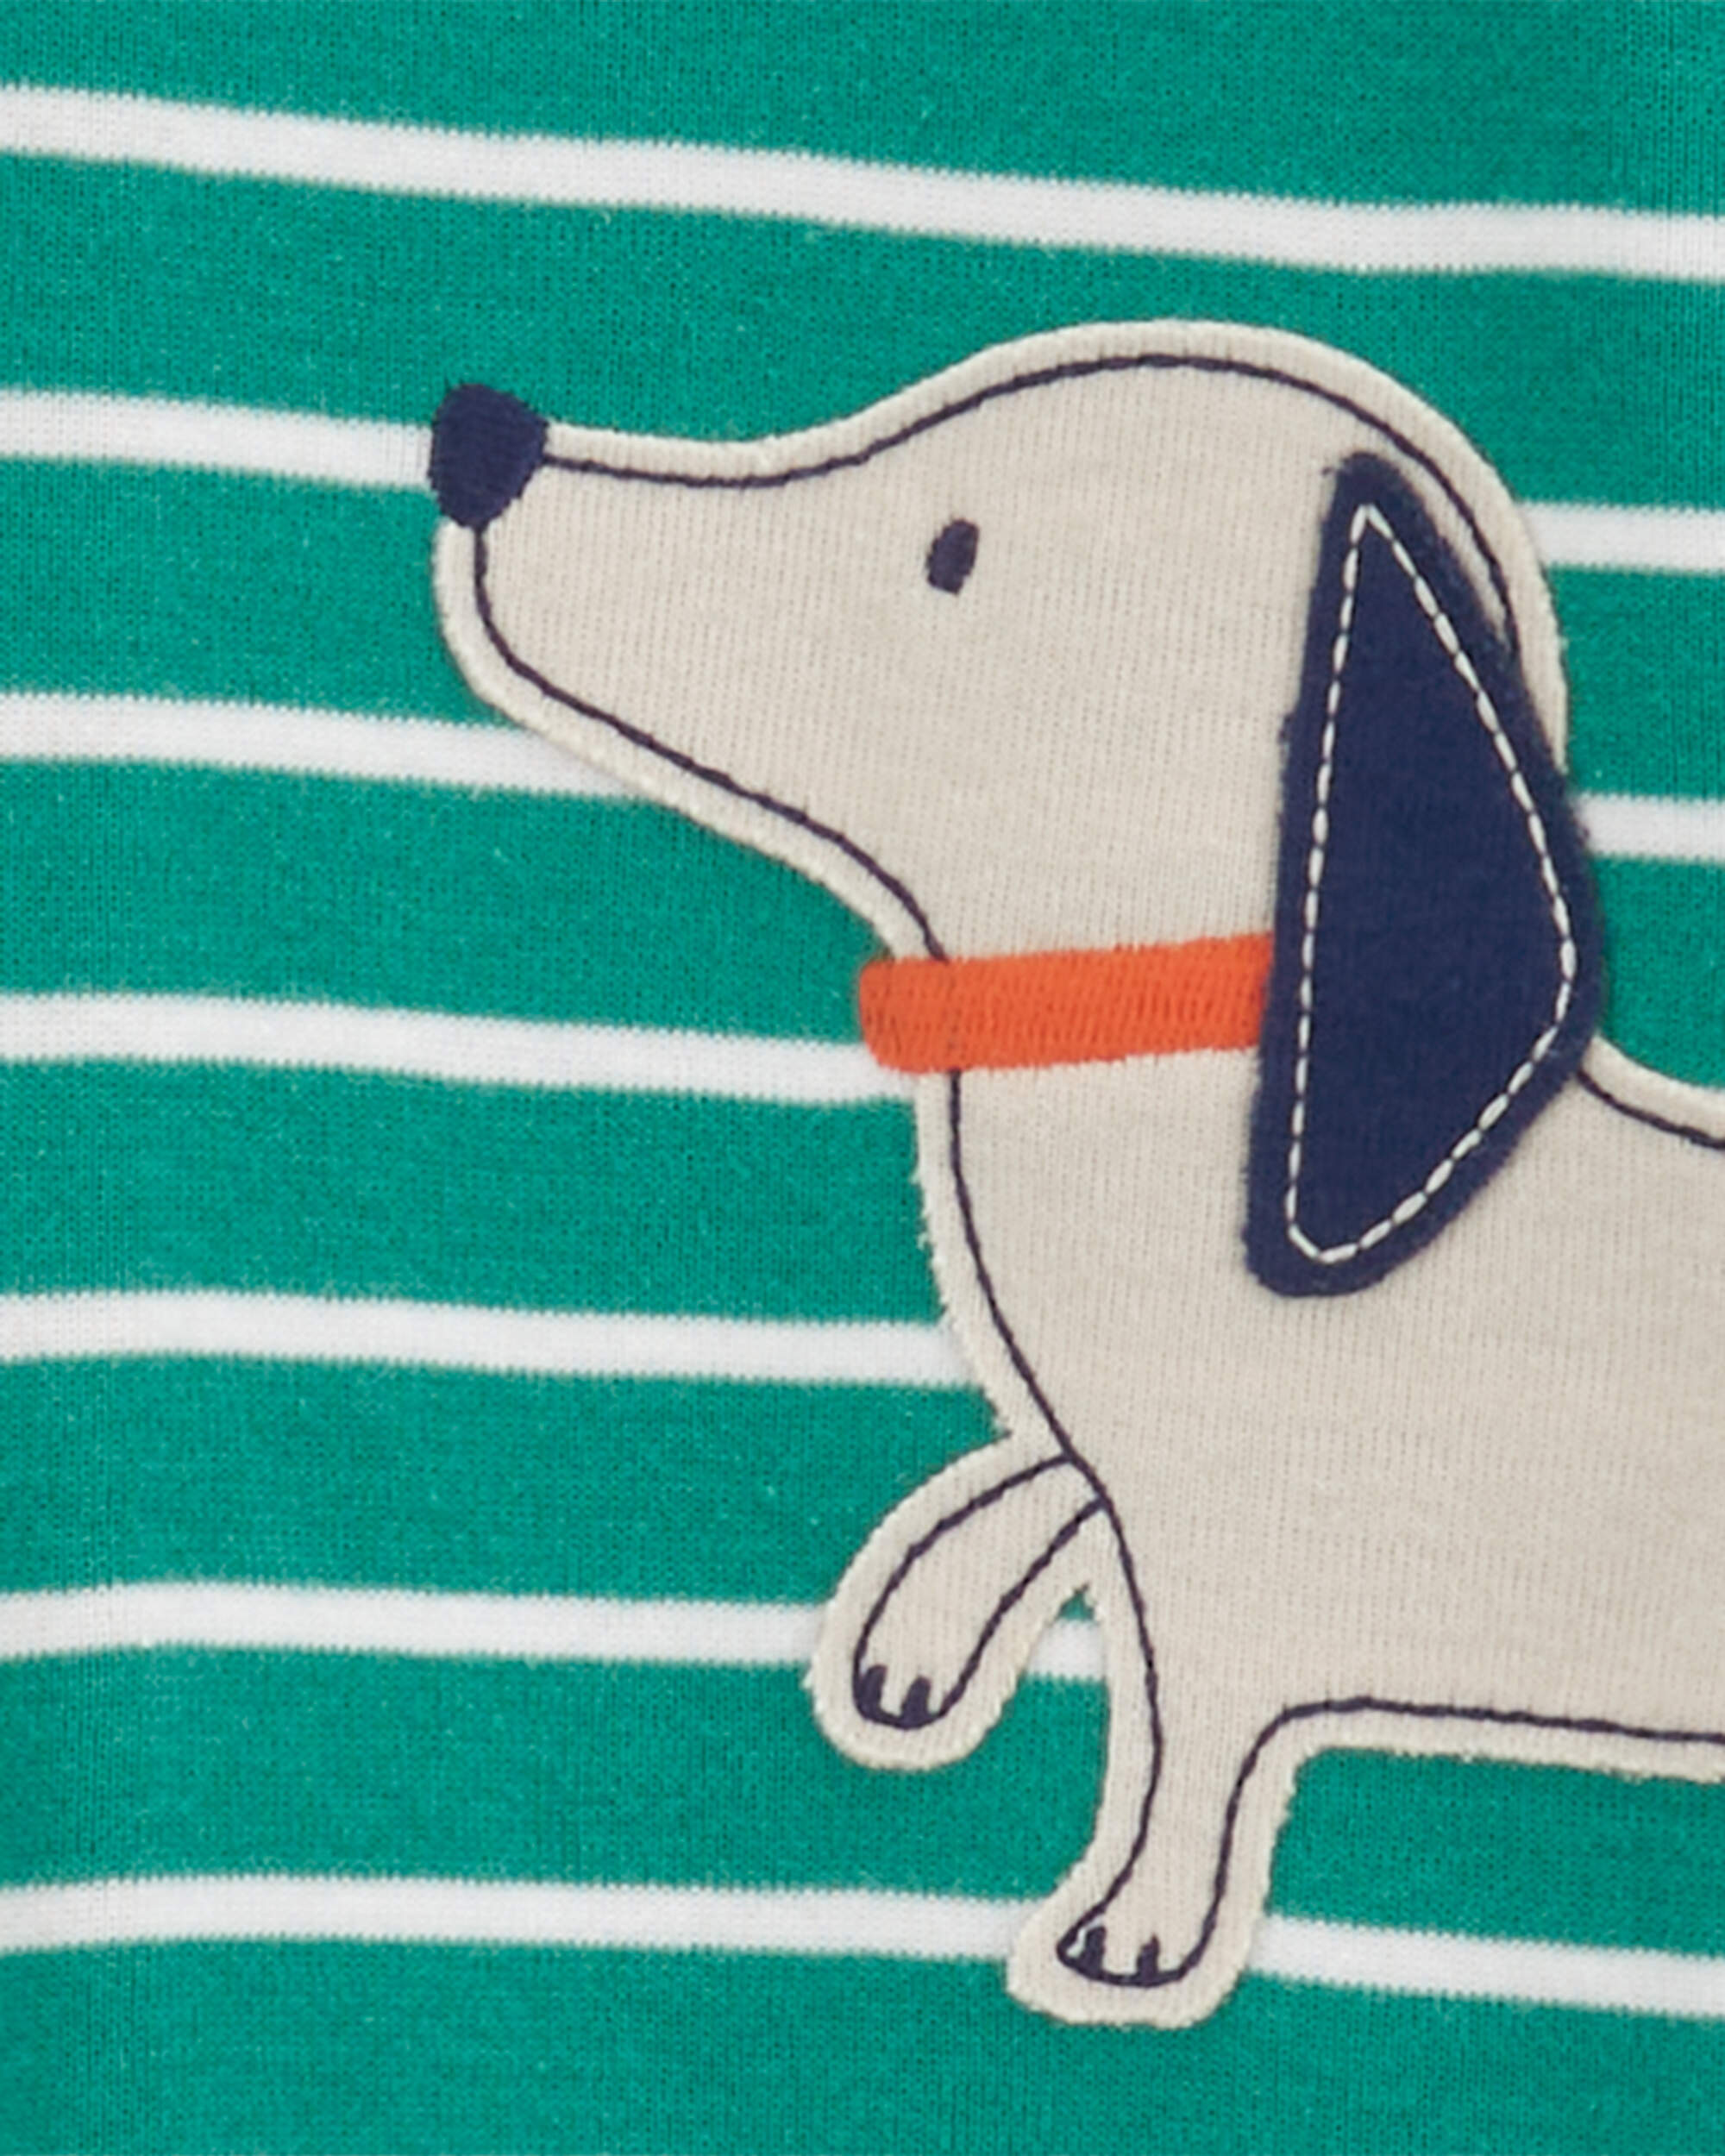 Toddler 1-Piece Dog 100% Snug Fit Cotton Footie Pyjamas